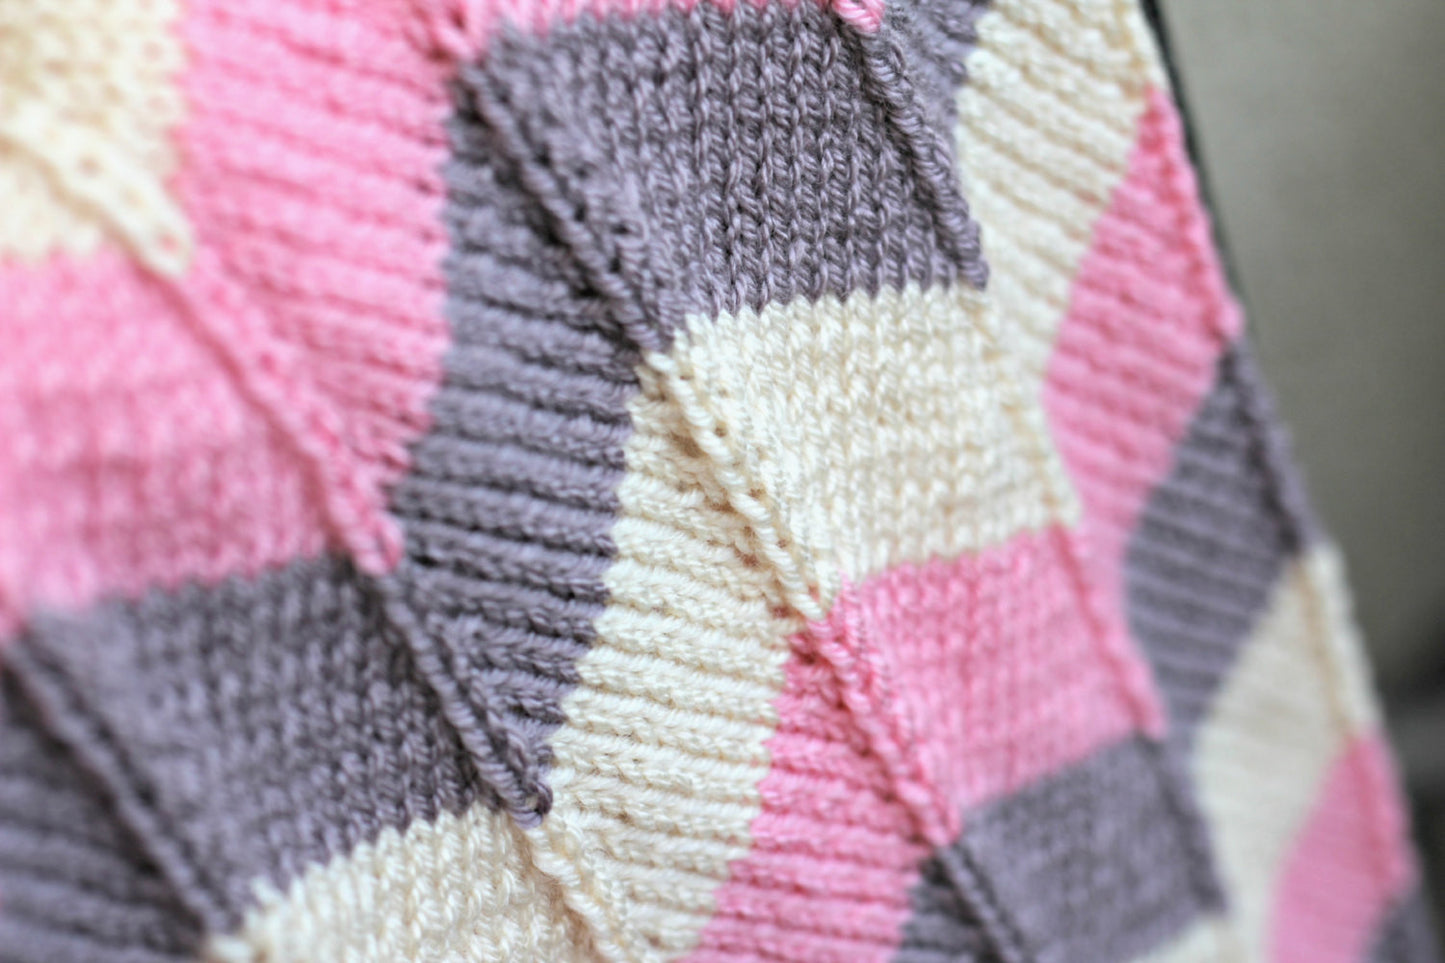 Knit baby blanket